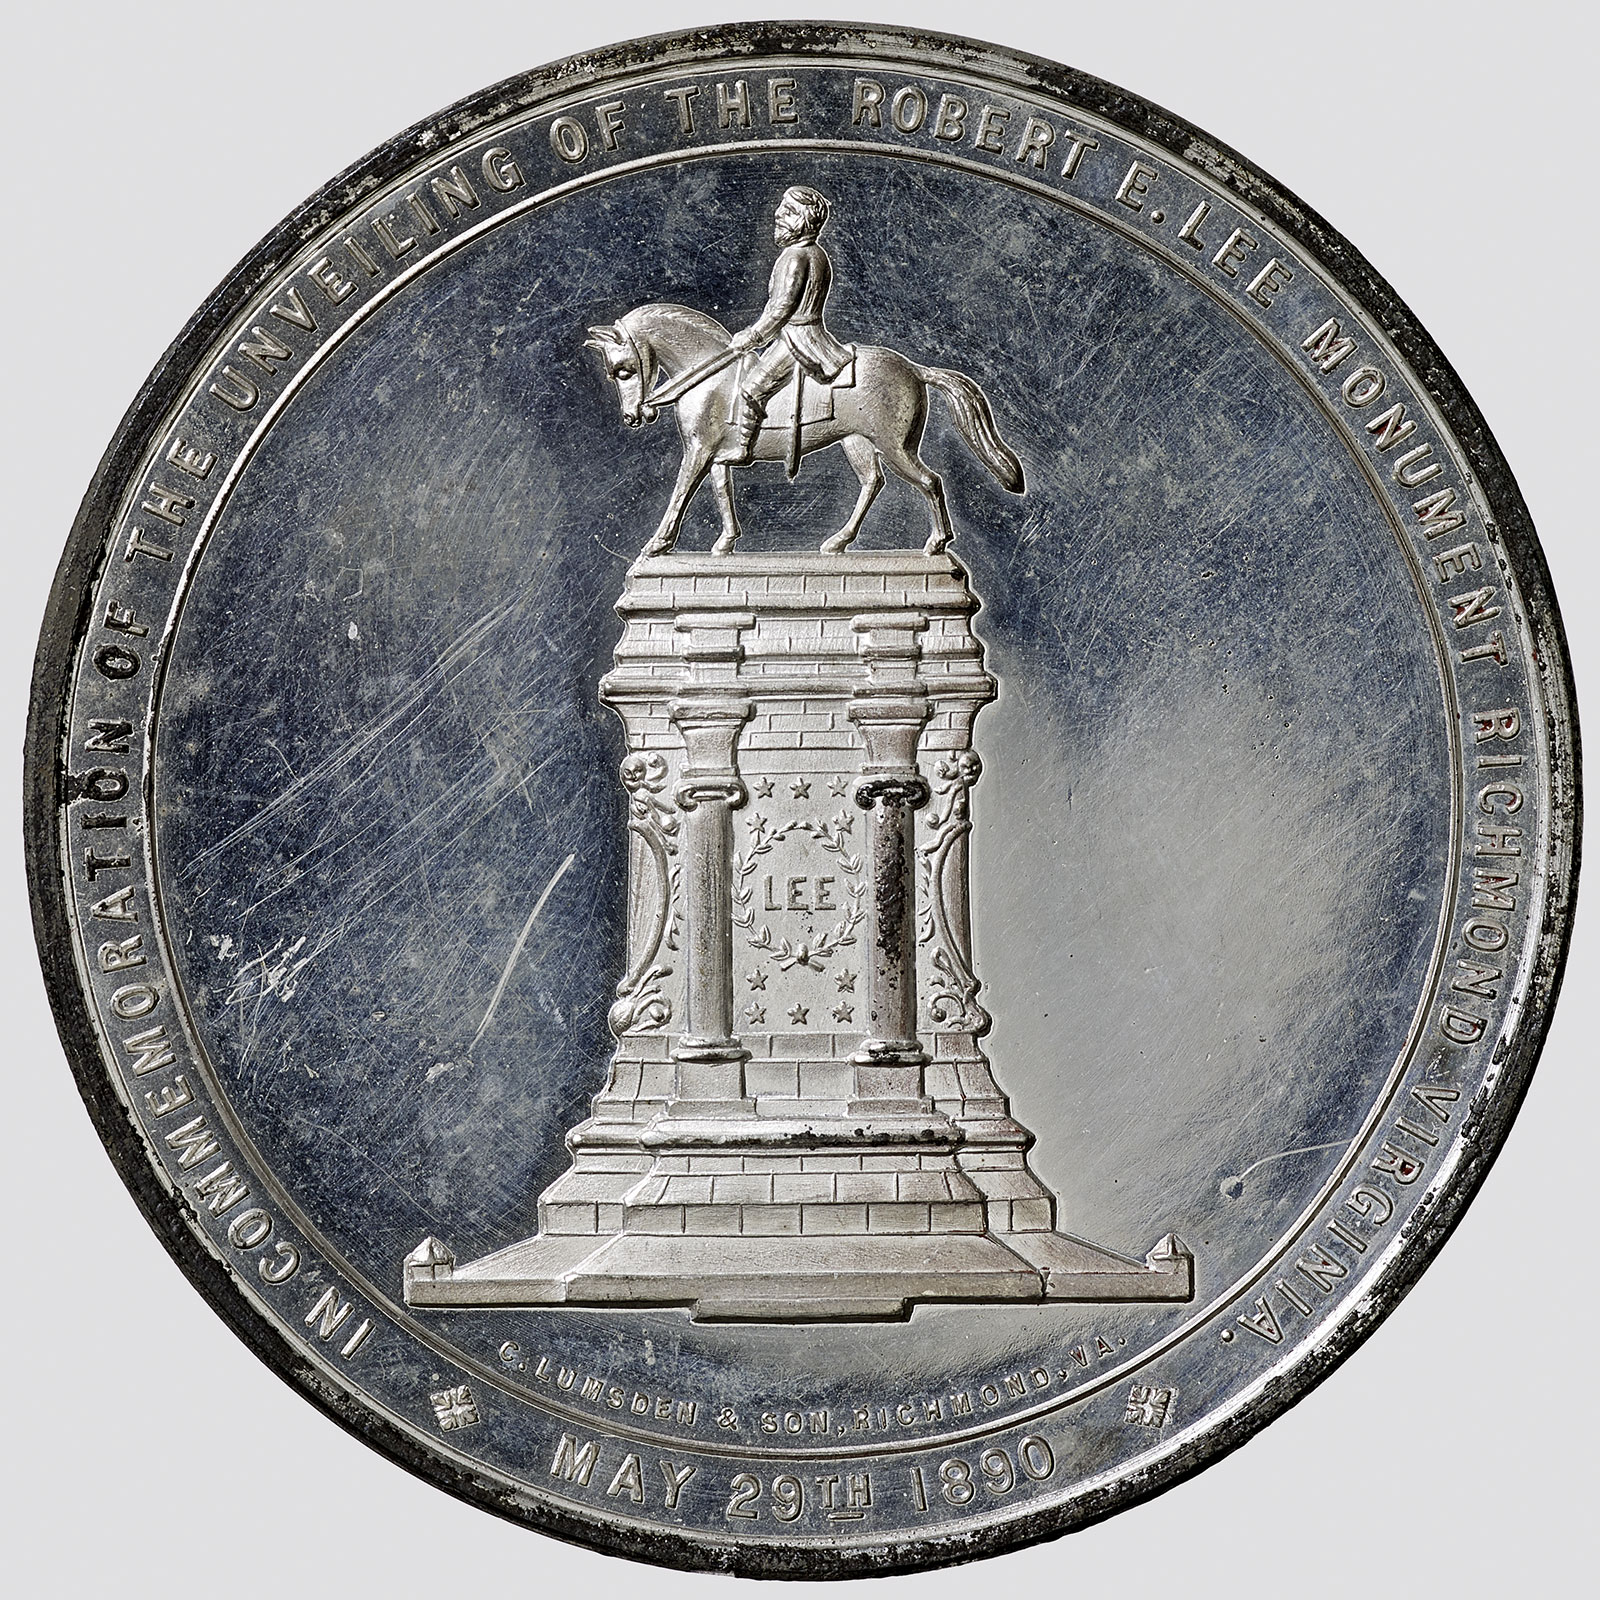 Civil War commemorative medallion